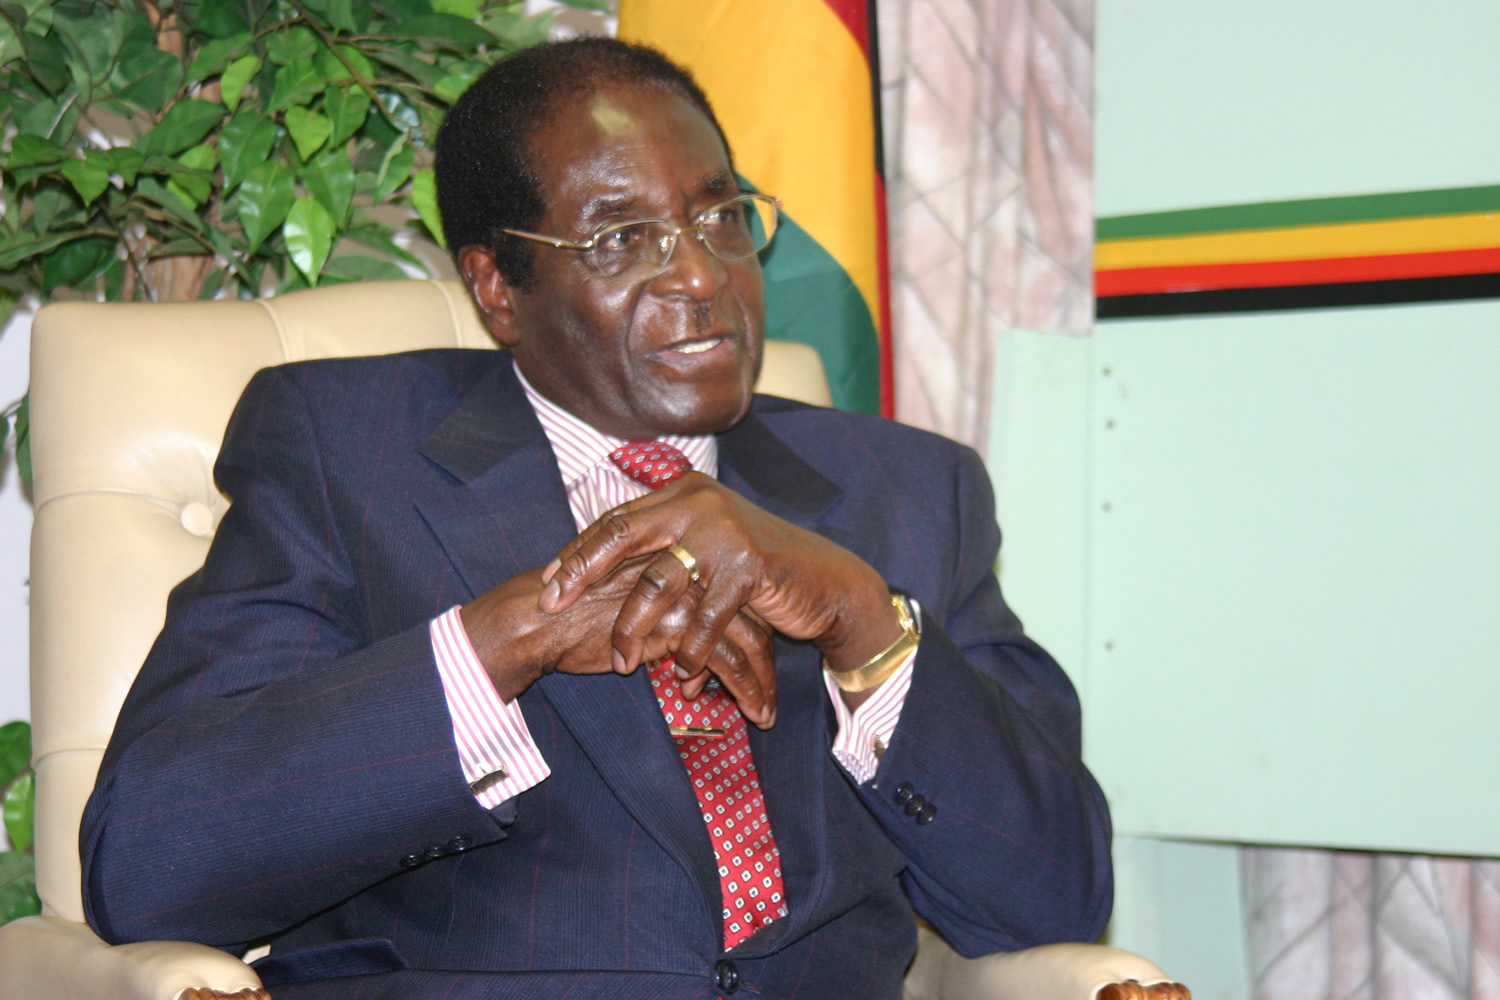 BREAKING NEWS: President Mugabe wins!